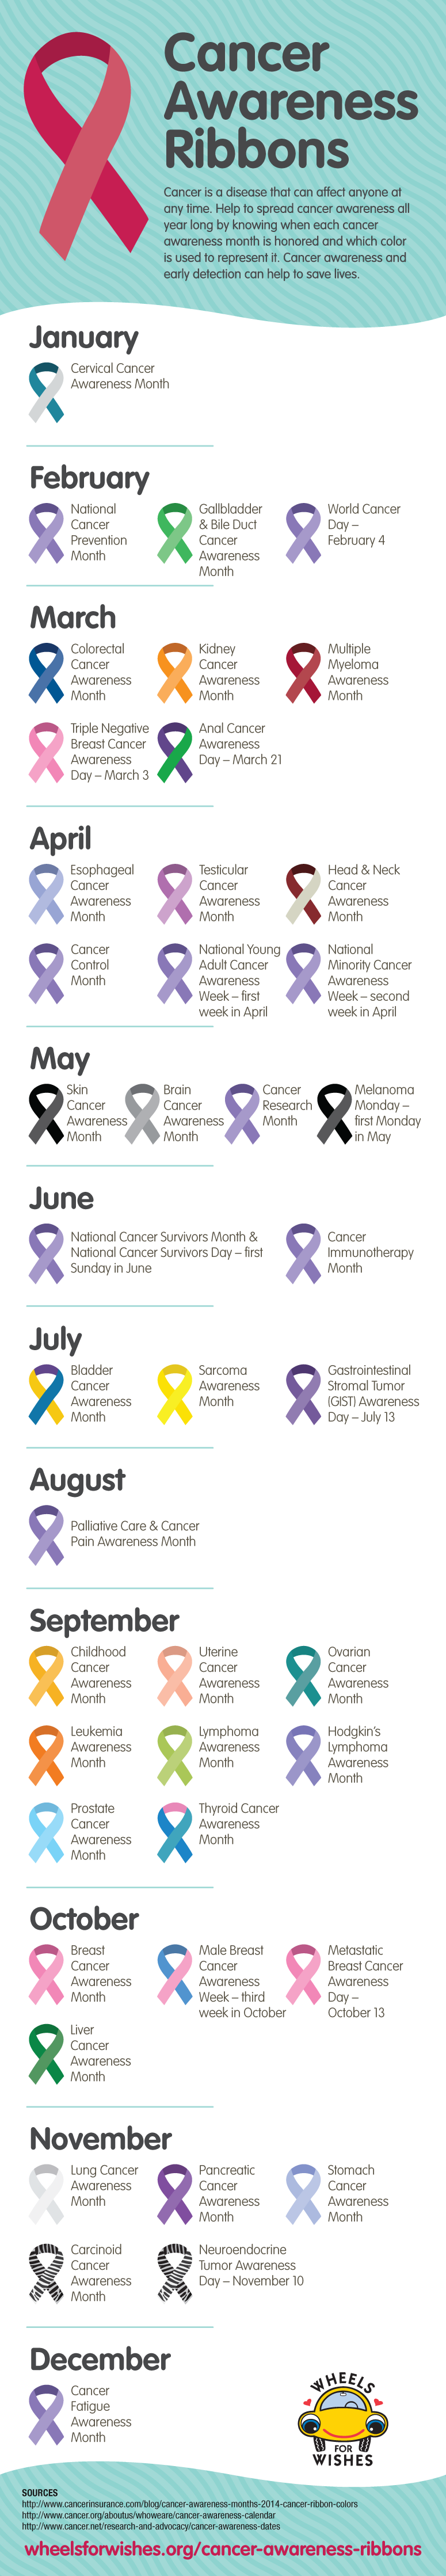 Cancer Awareness Ribbon Guide